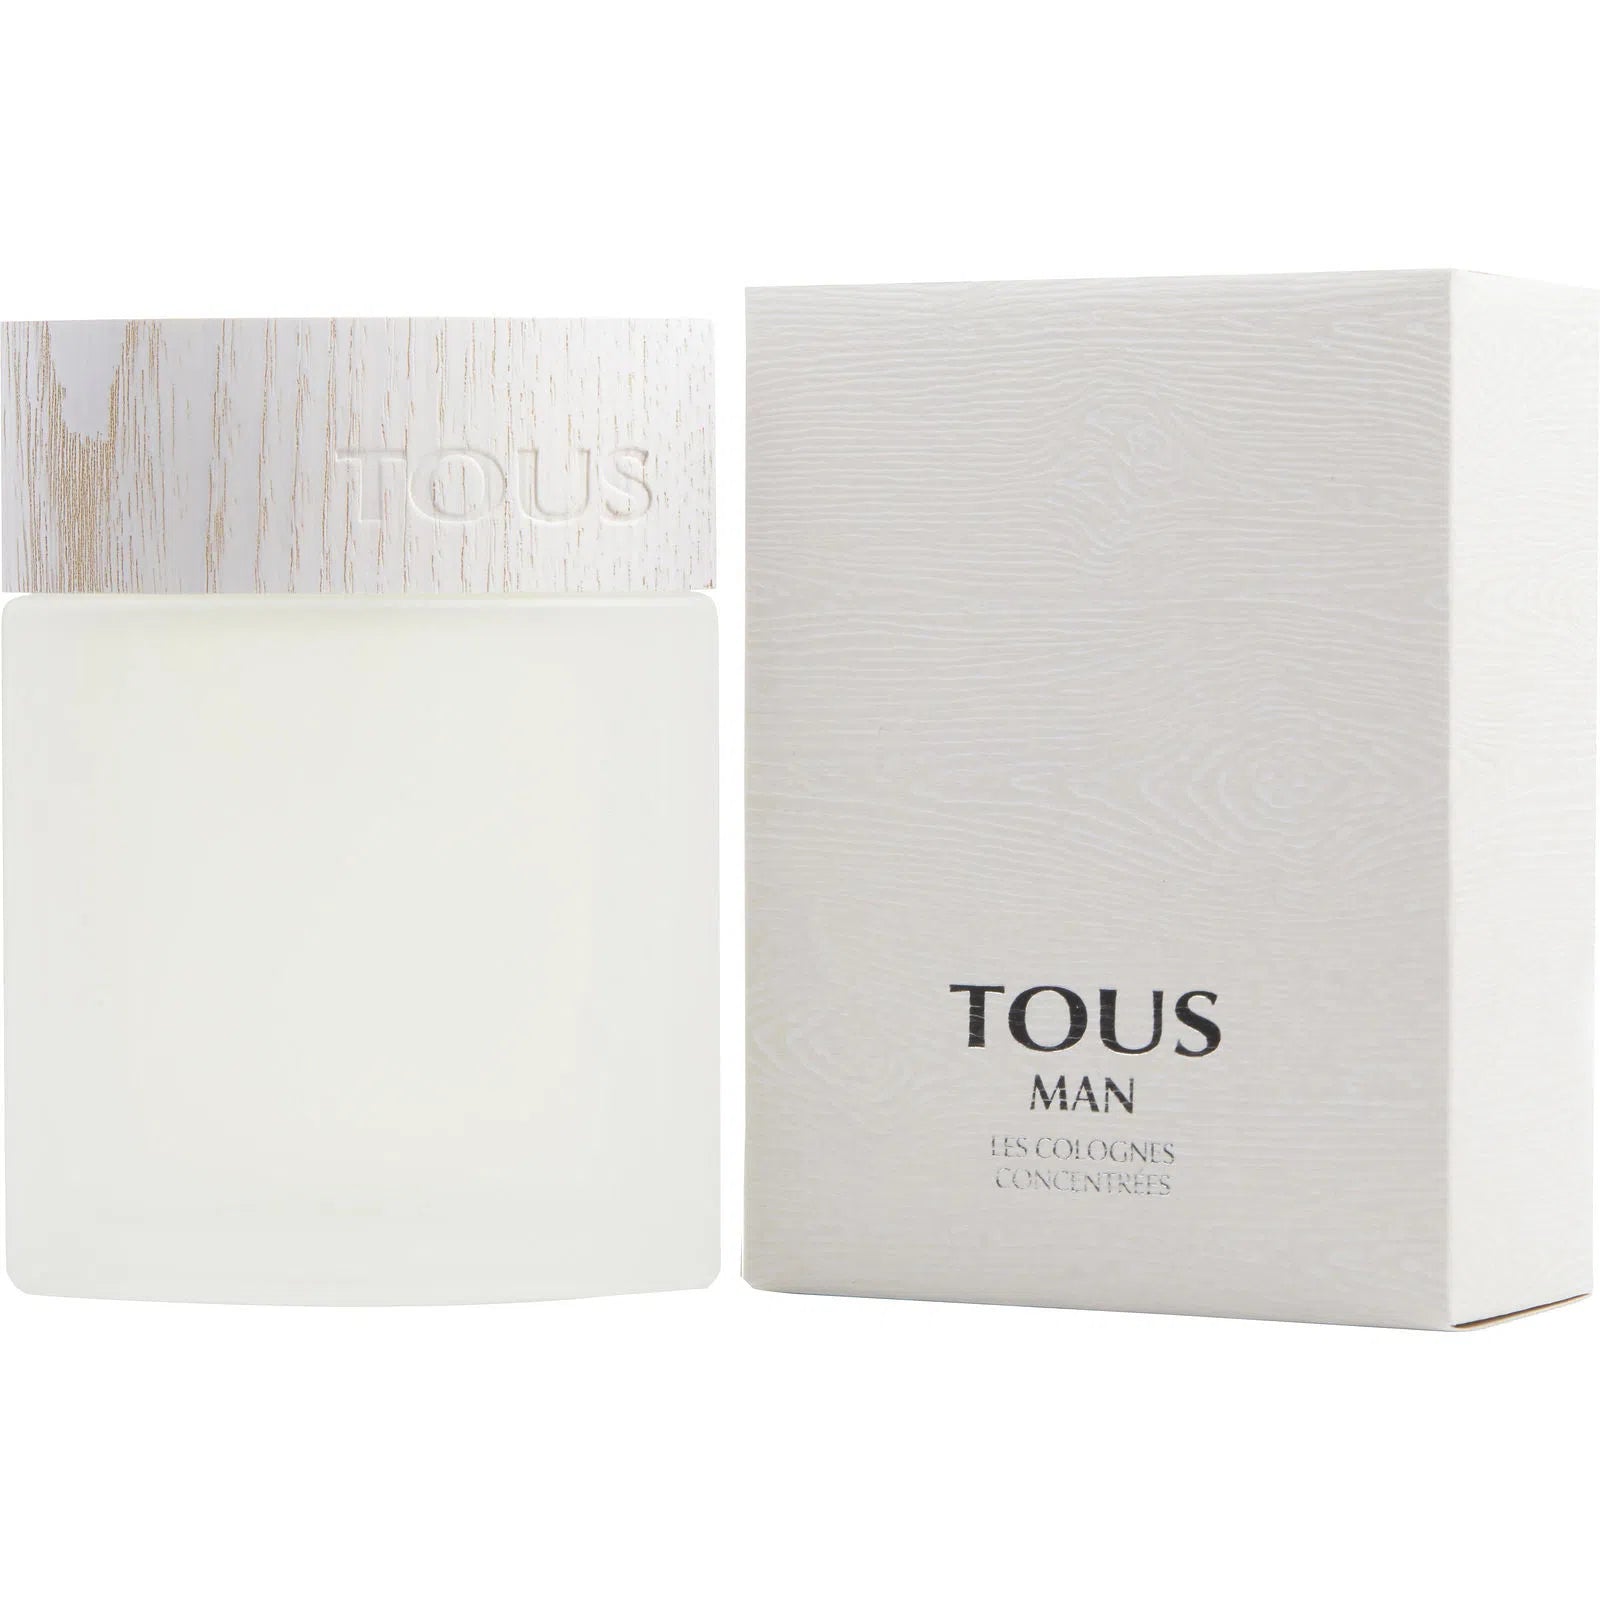 Perfume Tous Les Colognes Concentrees EDT (M) / 100 ml - 8436550502619- Prive Perfumes Honduras